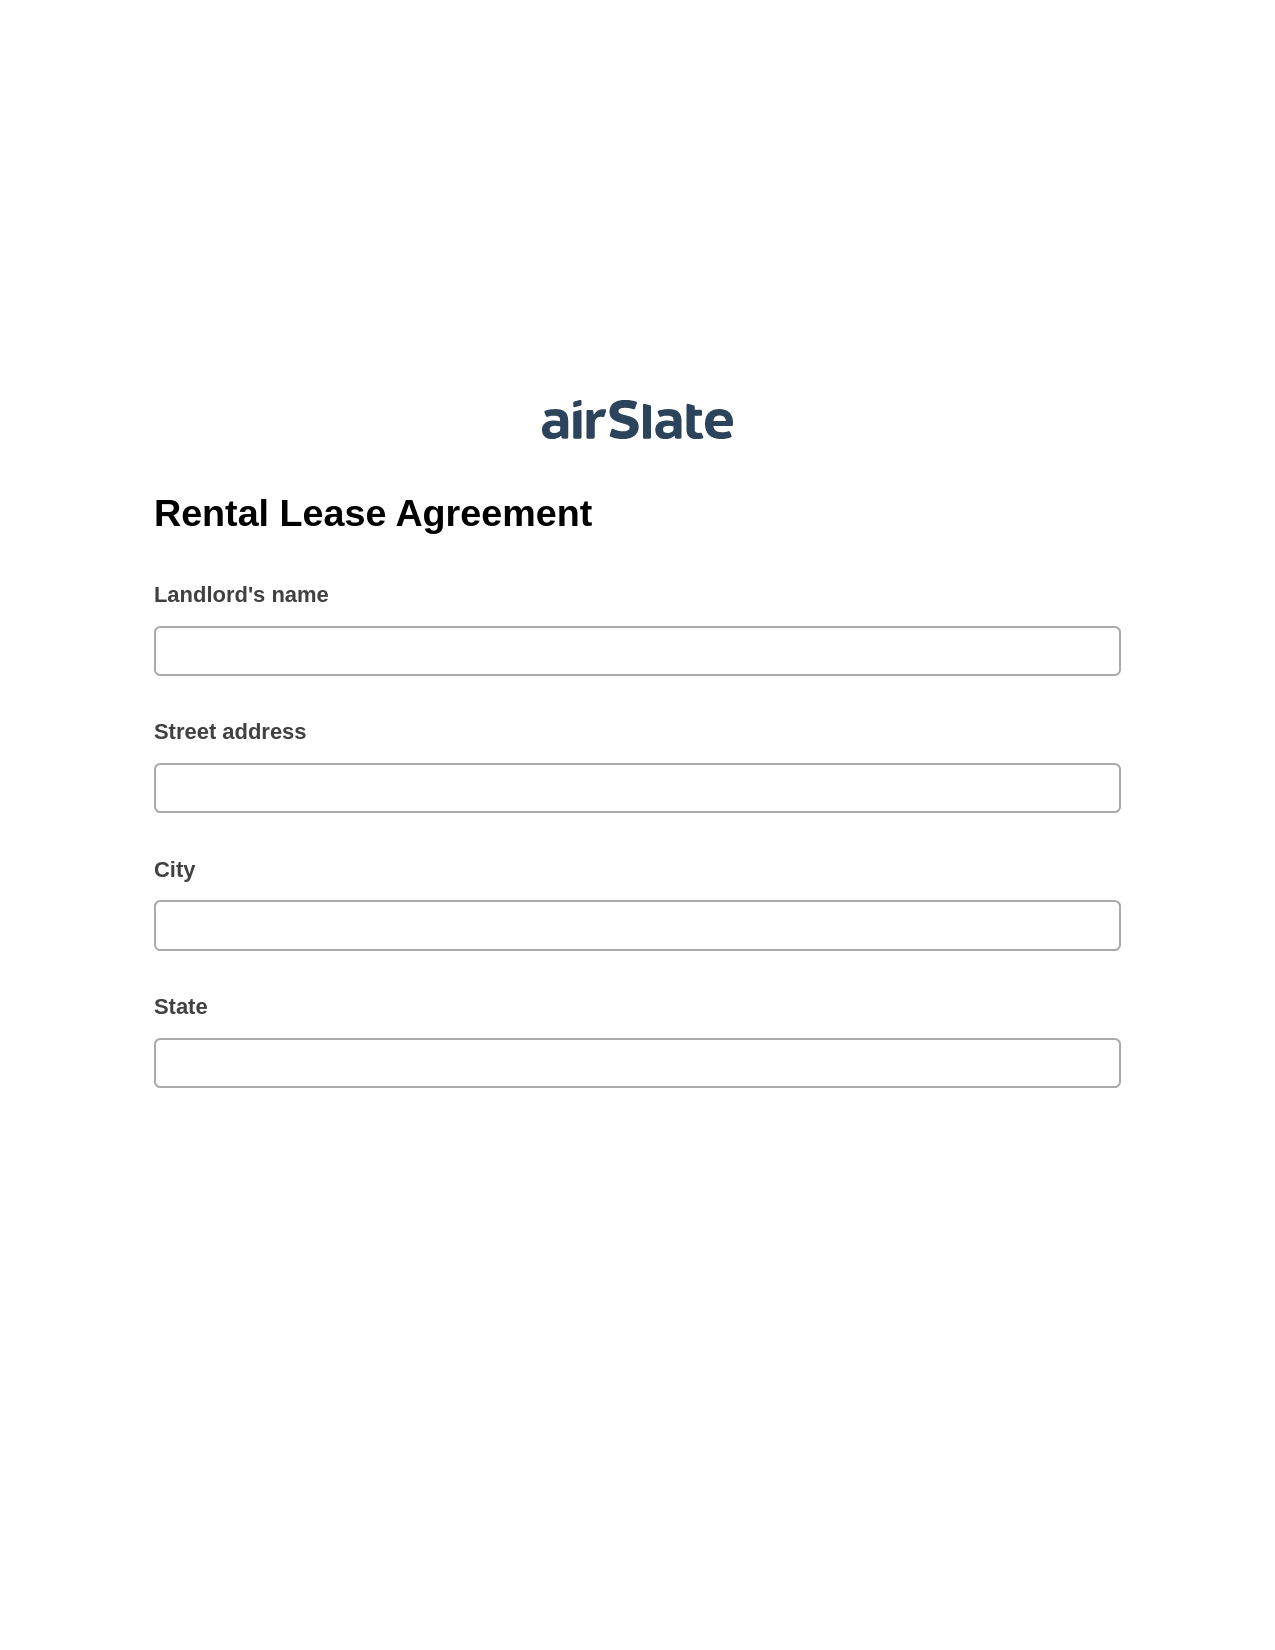 Multirole Rental Lease Agreement Pre-fill from Google Sheet Dropdown Options Bot, Invoke Salesforce Process Bot, Dropbox Bot